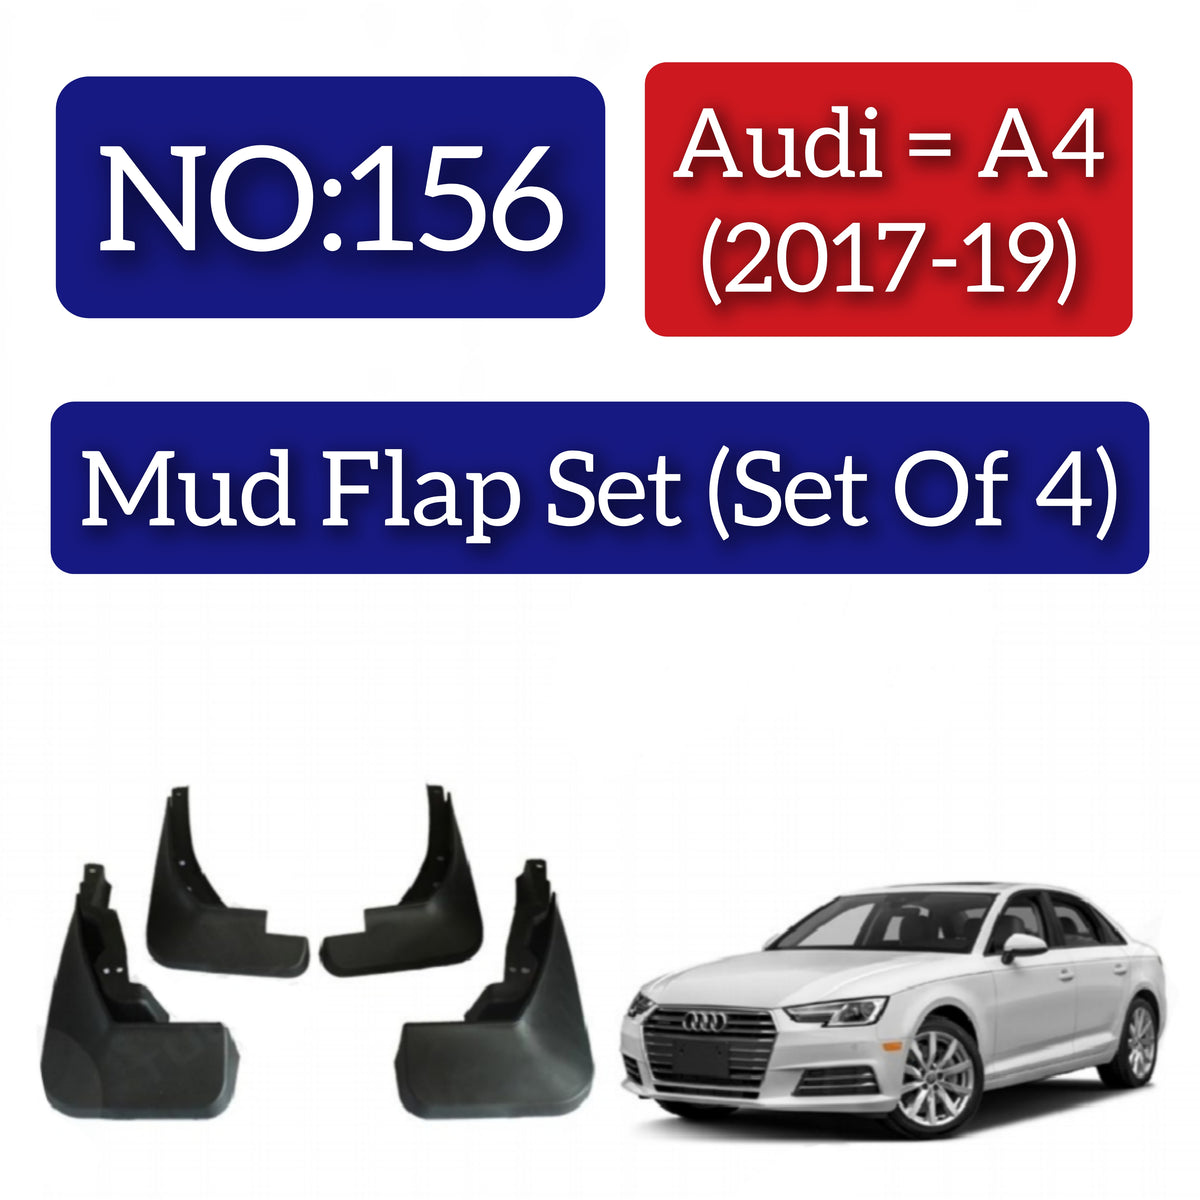 Audi A4 (2017-19) Mud Flap Set (Set of 4) Tag 156